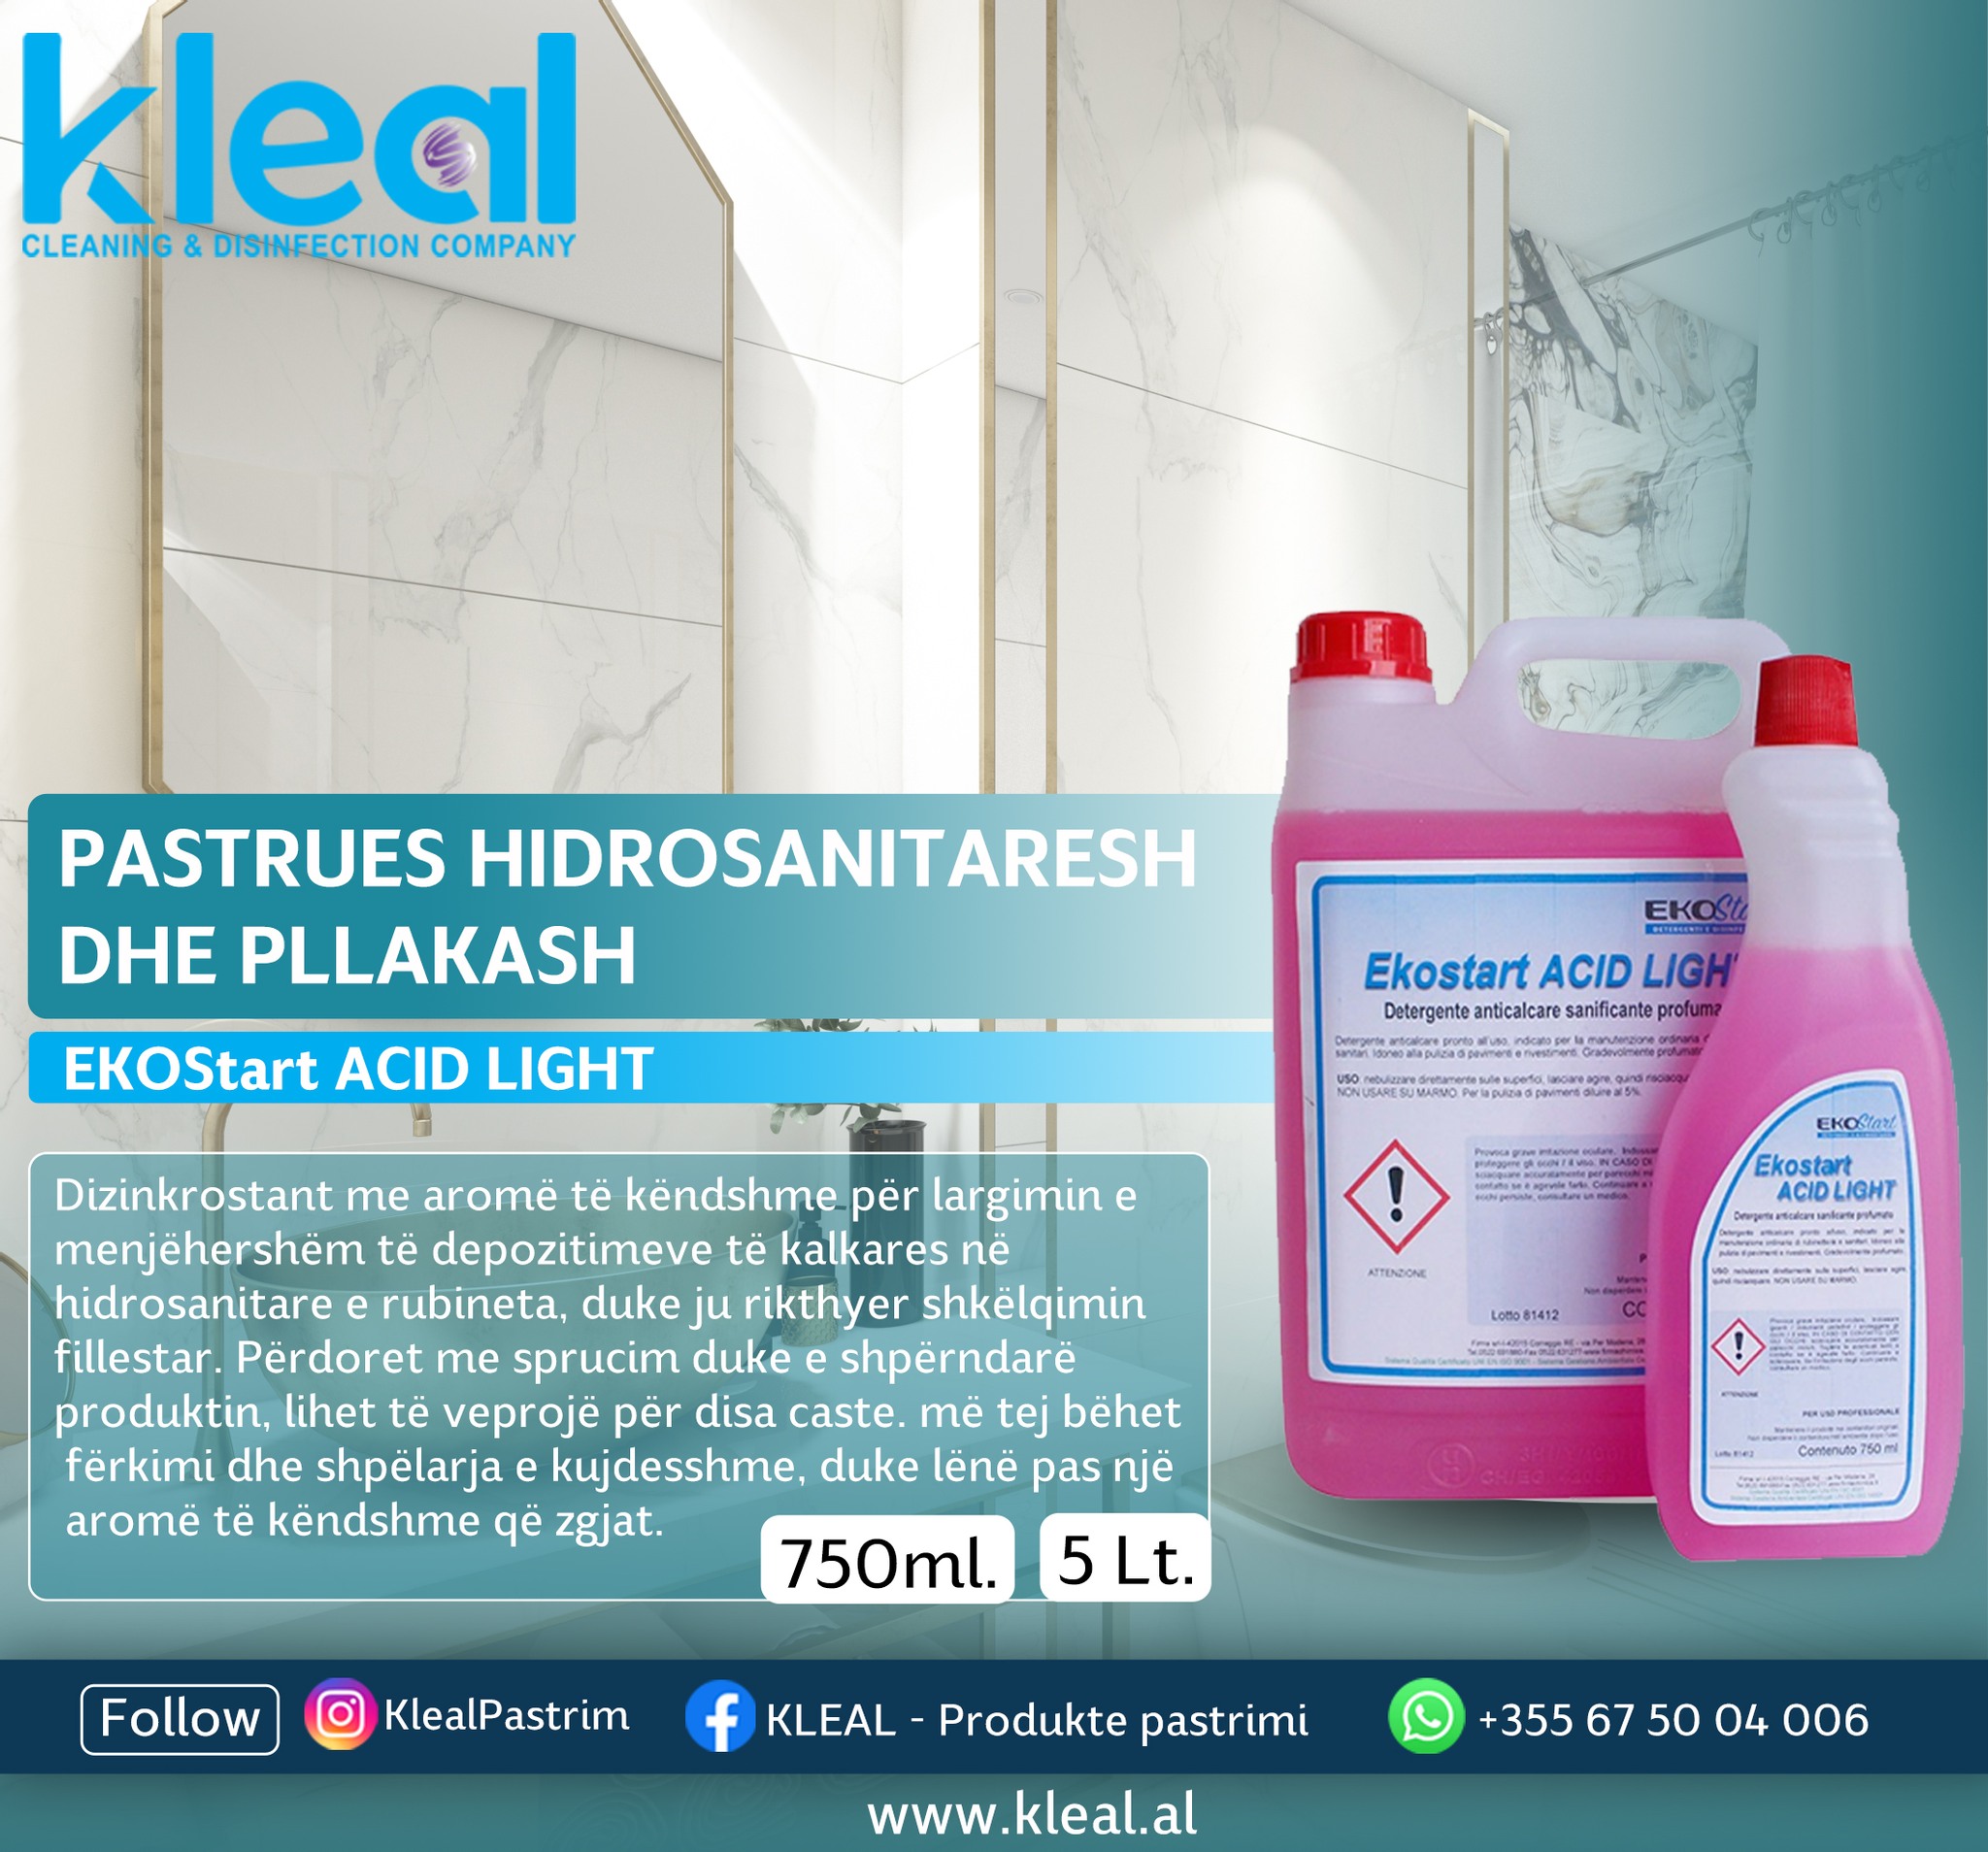 detergjente-produkte-pastrimi-12